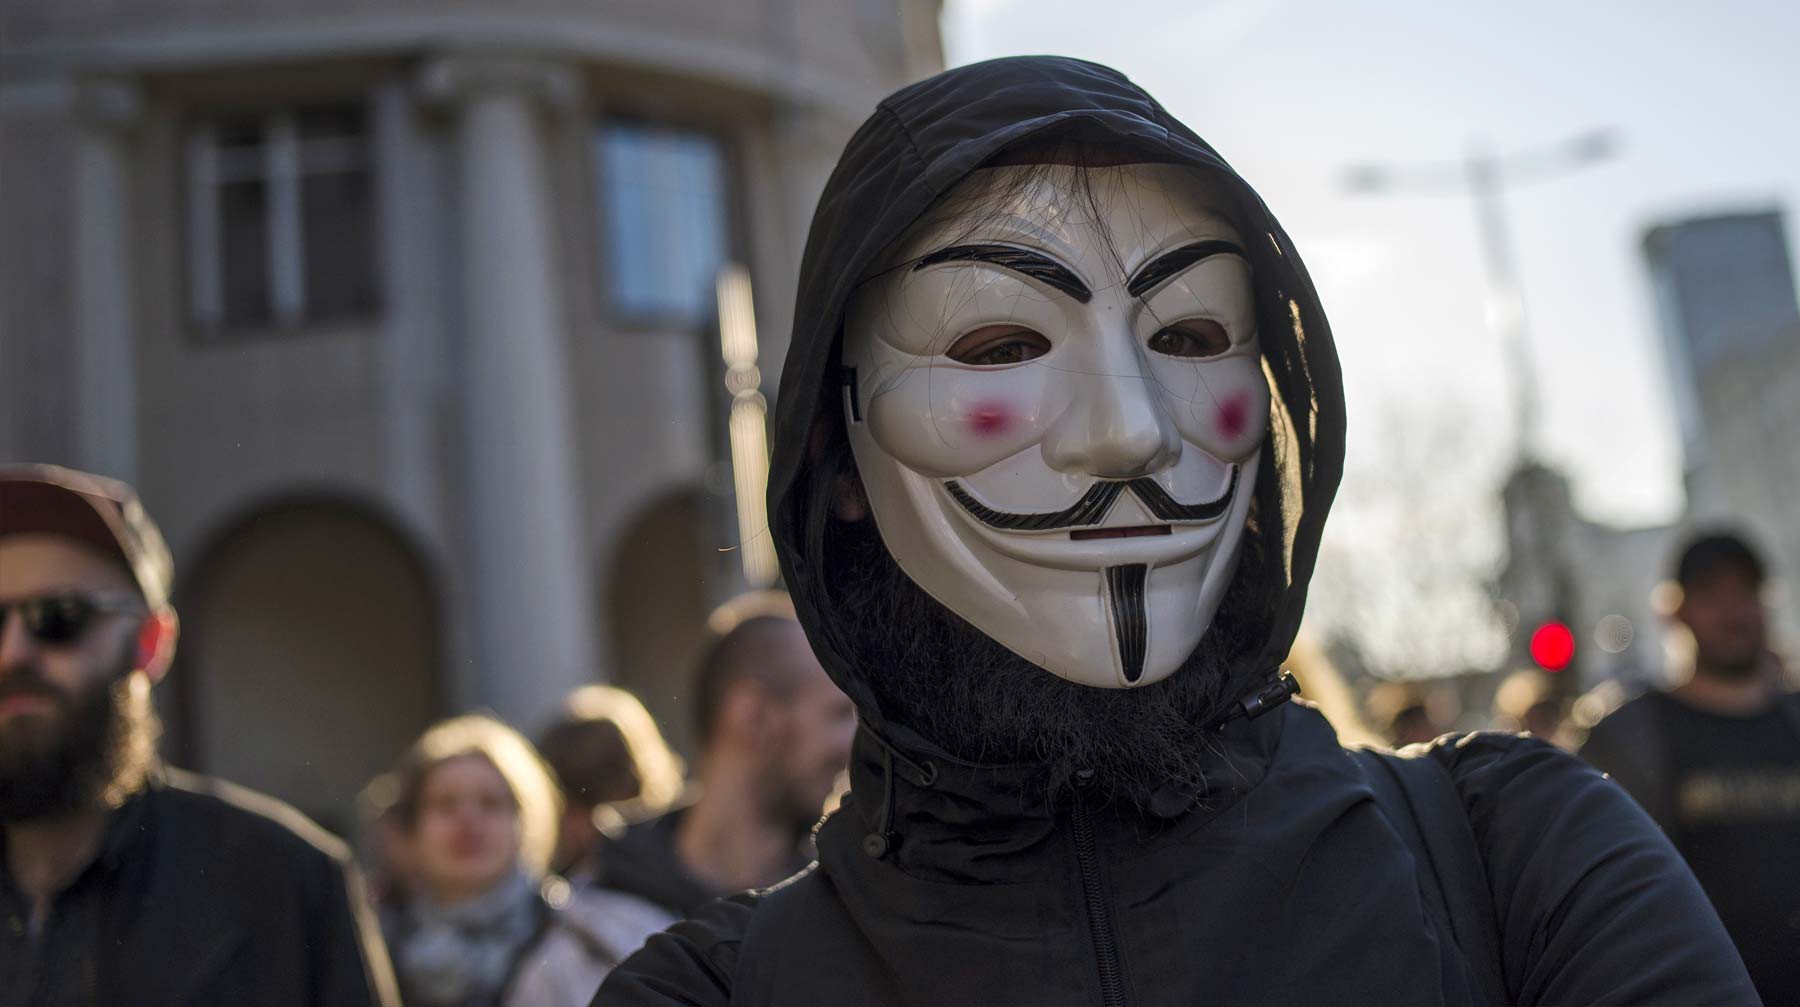 Dailystorm - Хакерская группа Anonymous предъявила ультиматум арестовавшим Ассанжа